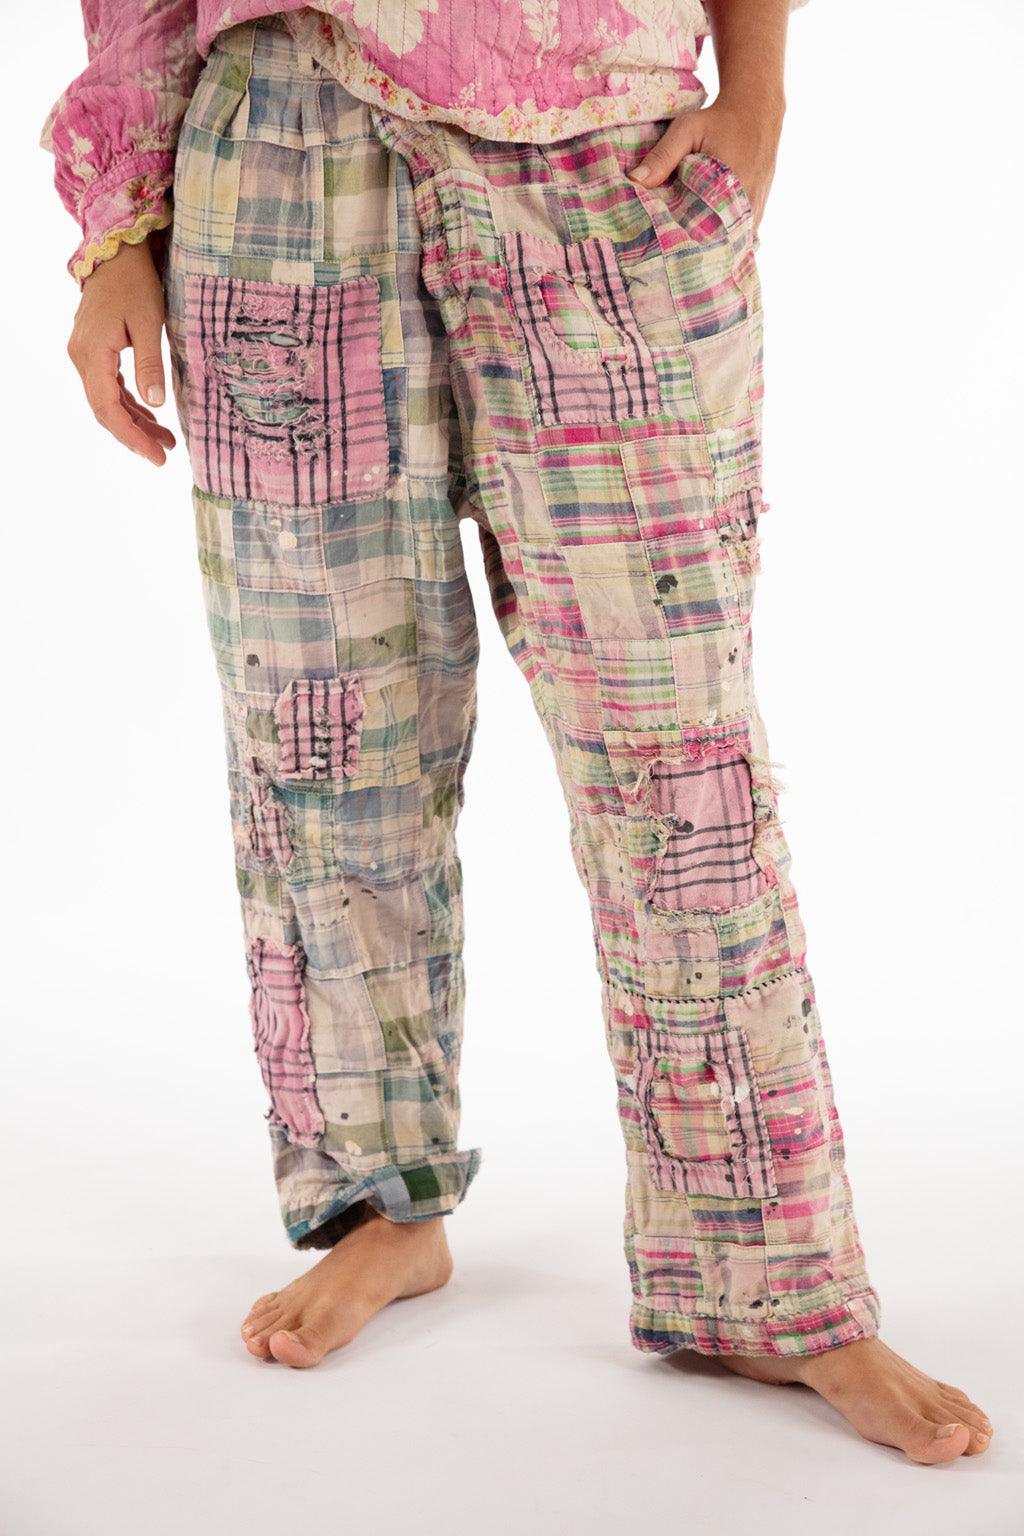 Beautiful Boho hippie patchwork pants Unisex | eBay